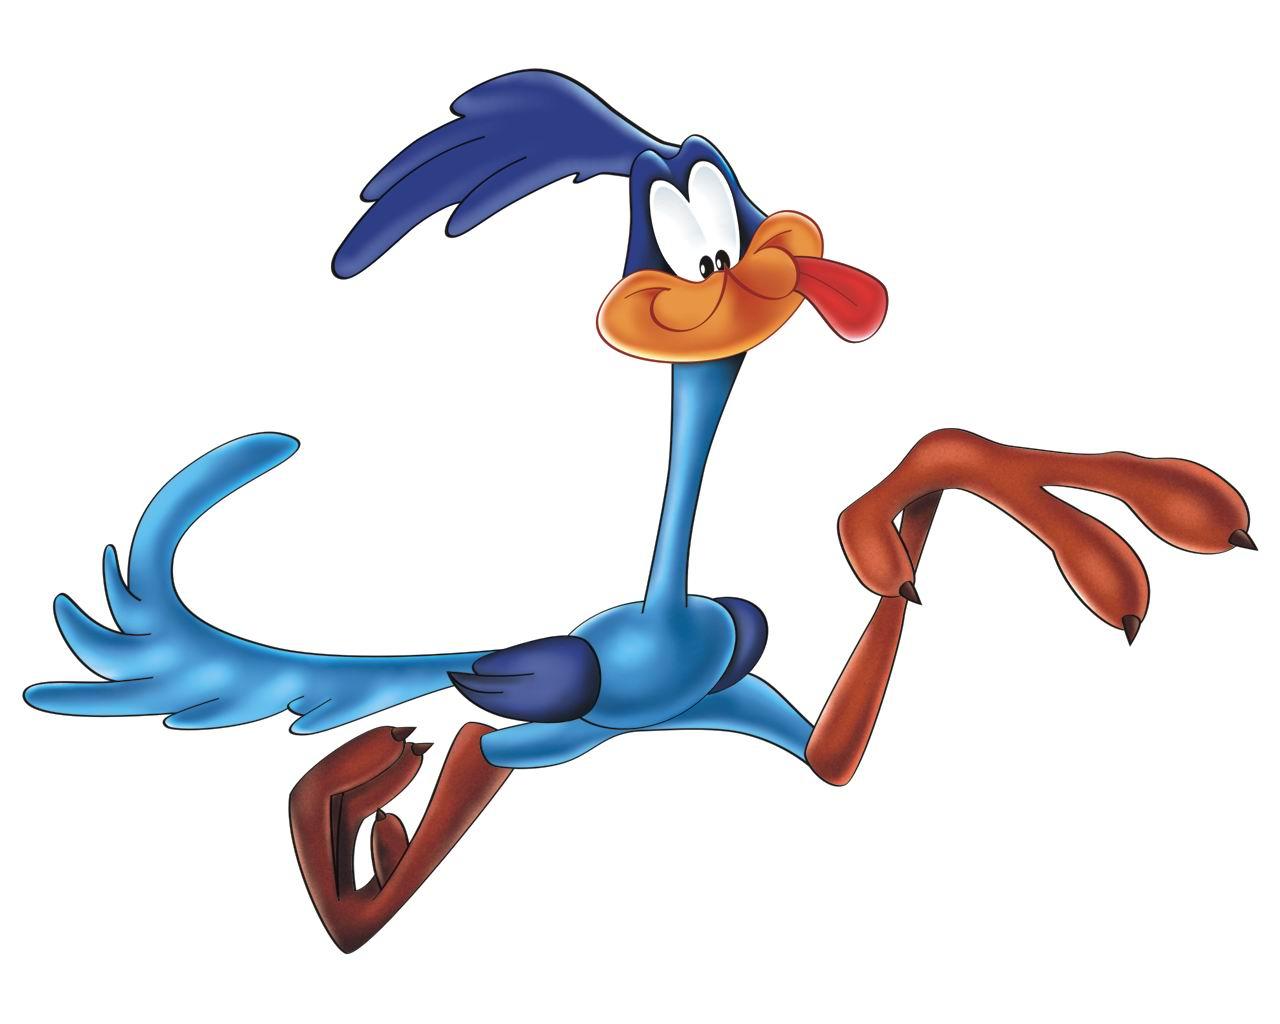 image about Looney Tunes Phreek: Roadrunner